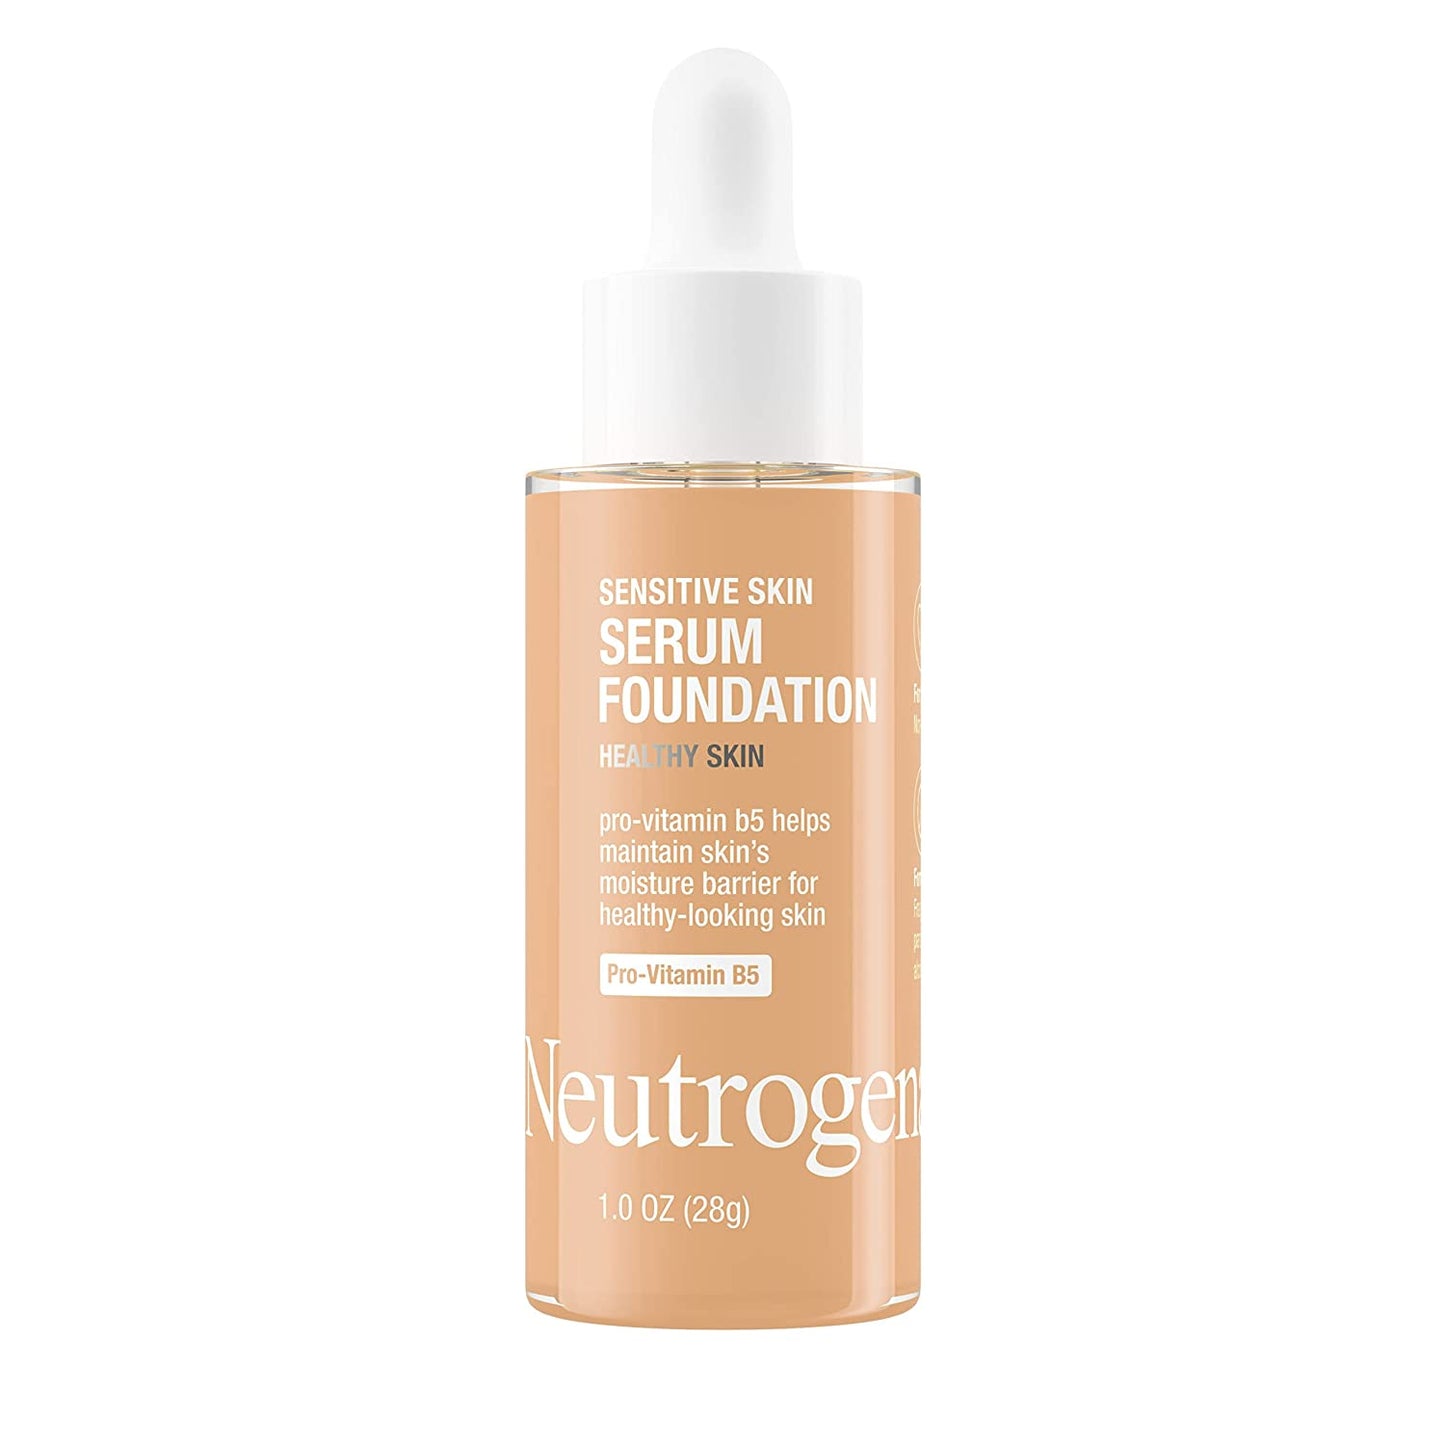 Neutrogena Sensitive Skin Serum Foundation With Pro-Vitamin B5 01 - 28g / 1.0 oz